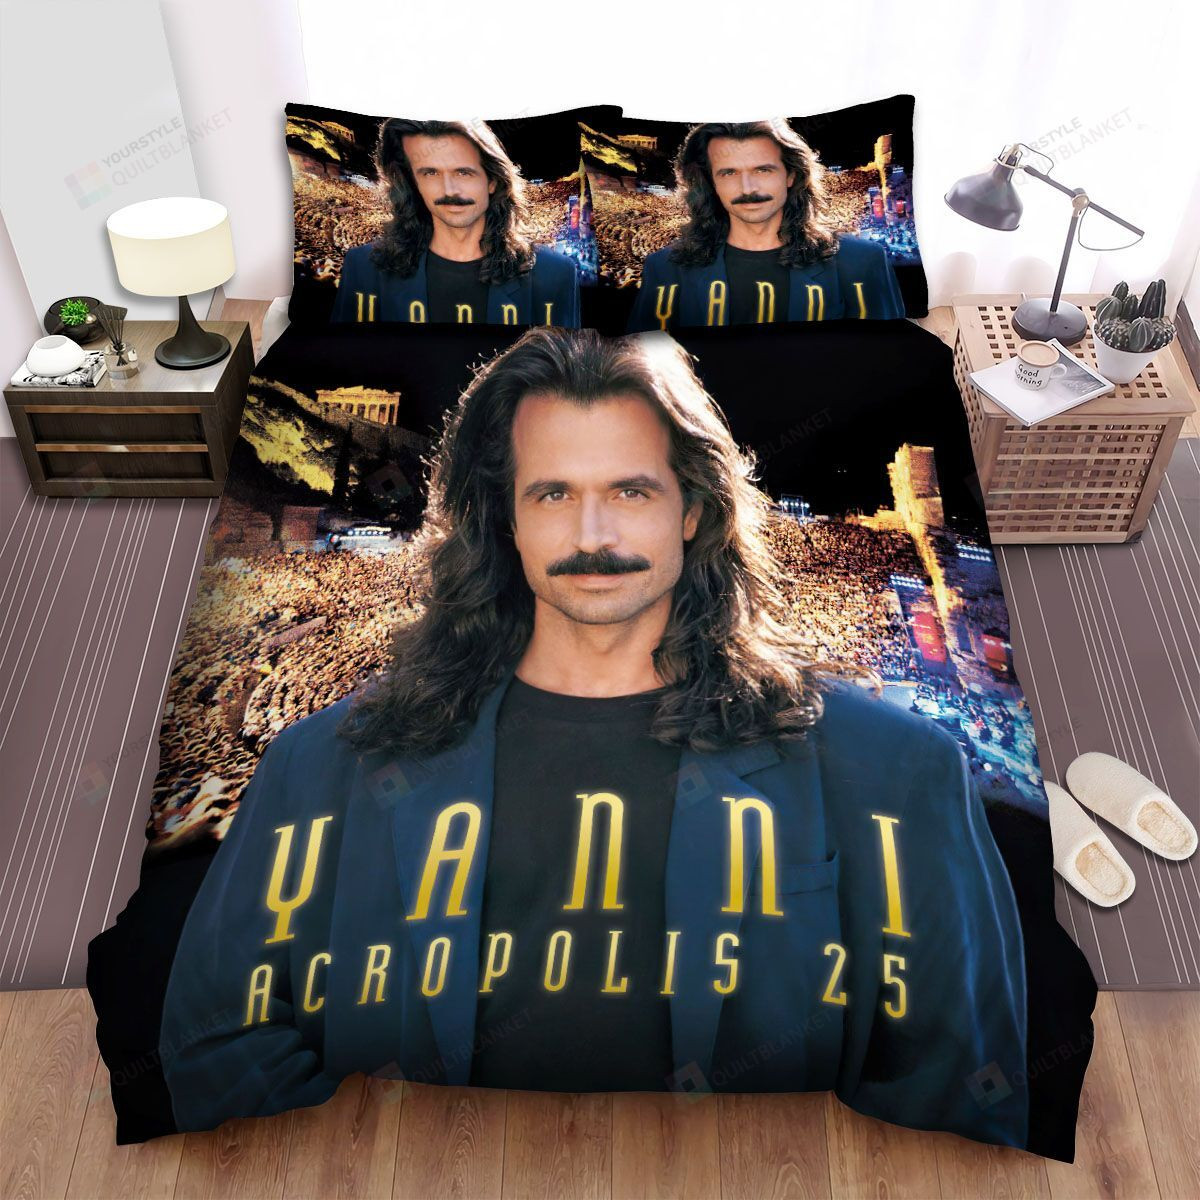 Yanni Acropolis 25 Album Cover Bed Sheets Spread Comforter Duvet Cover Bedding Sets